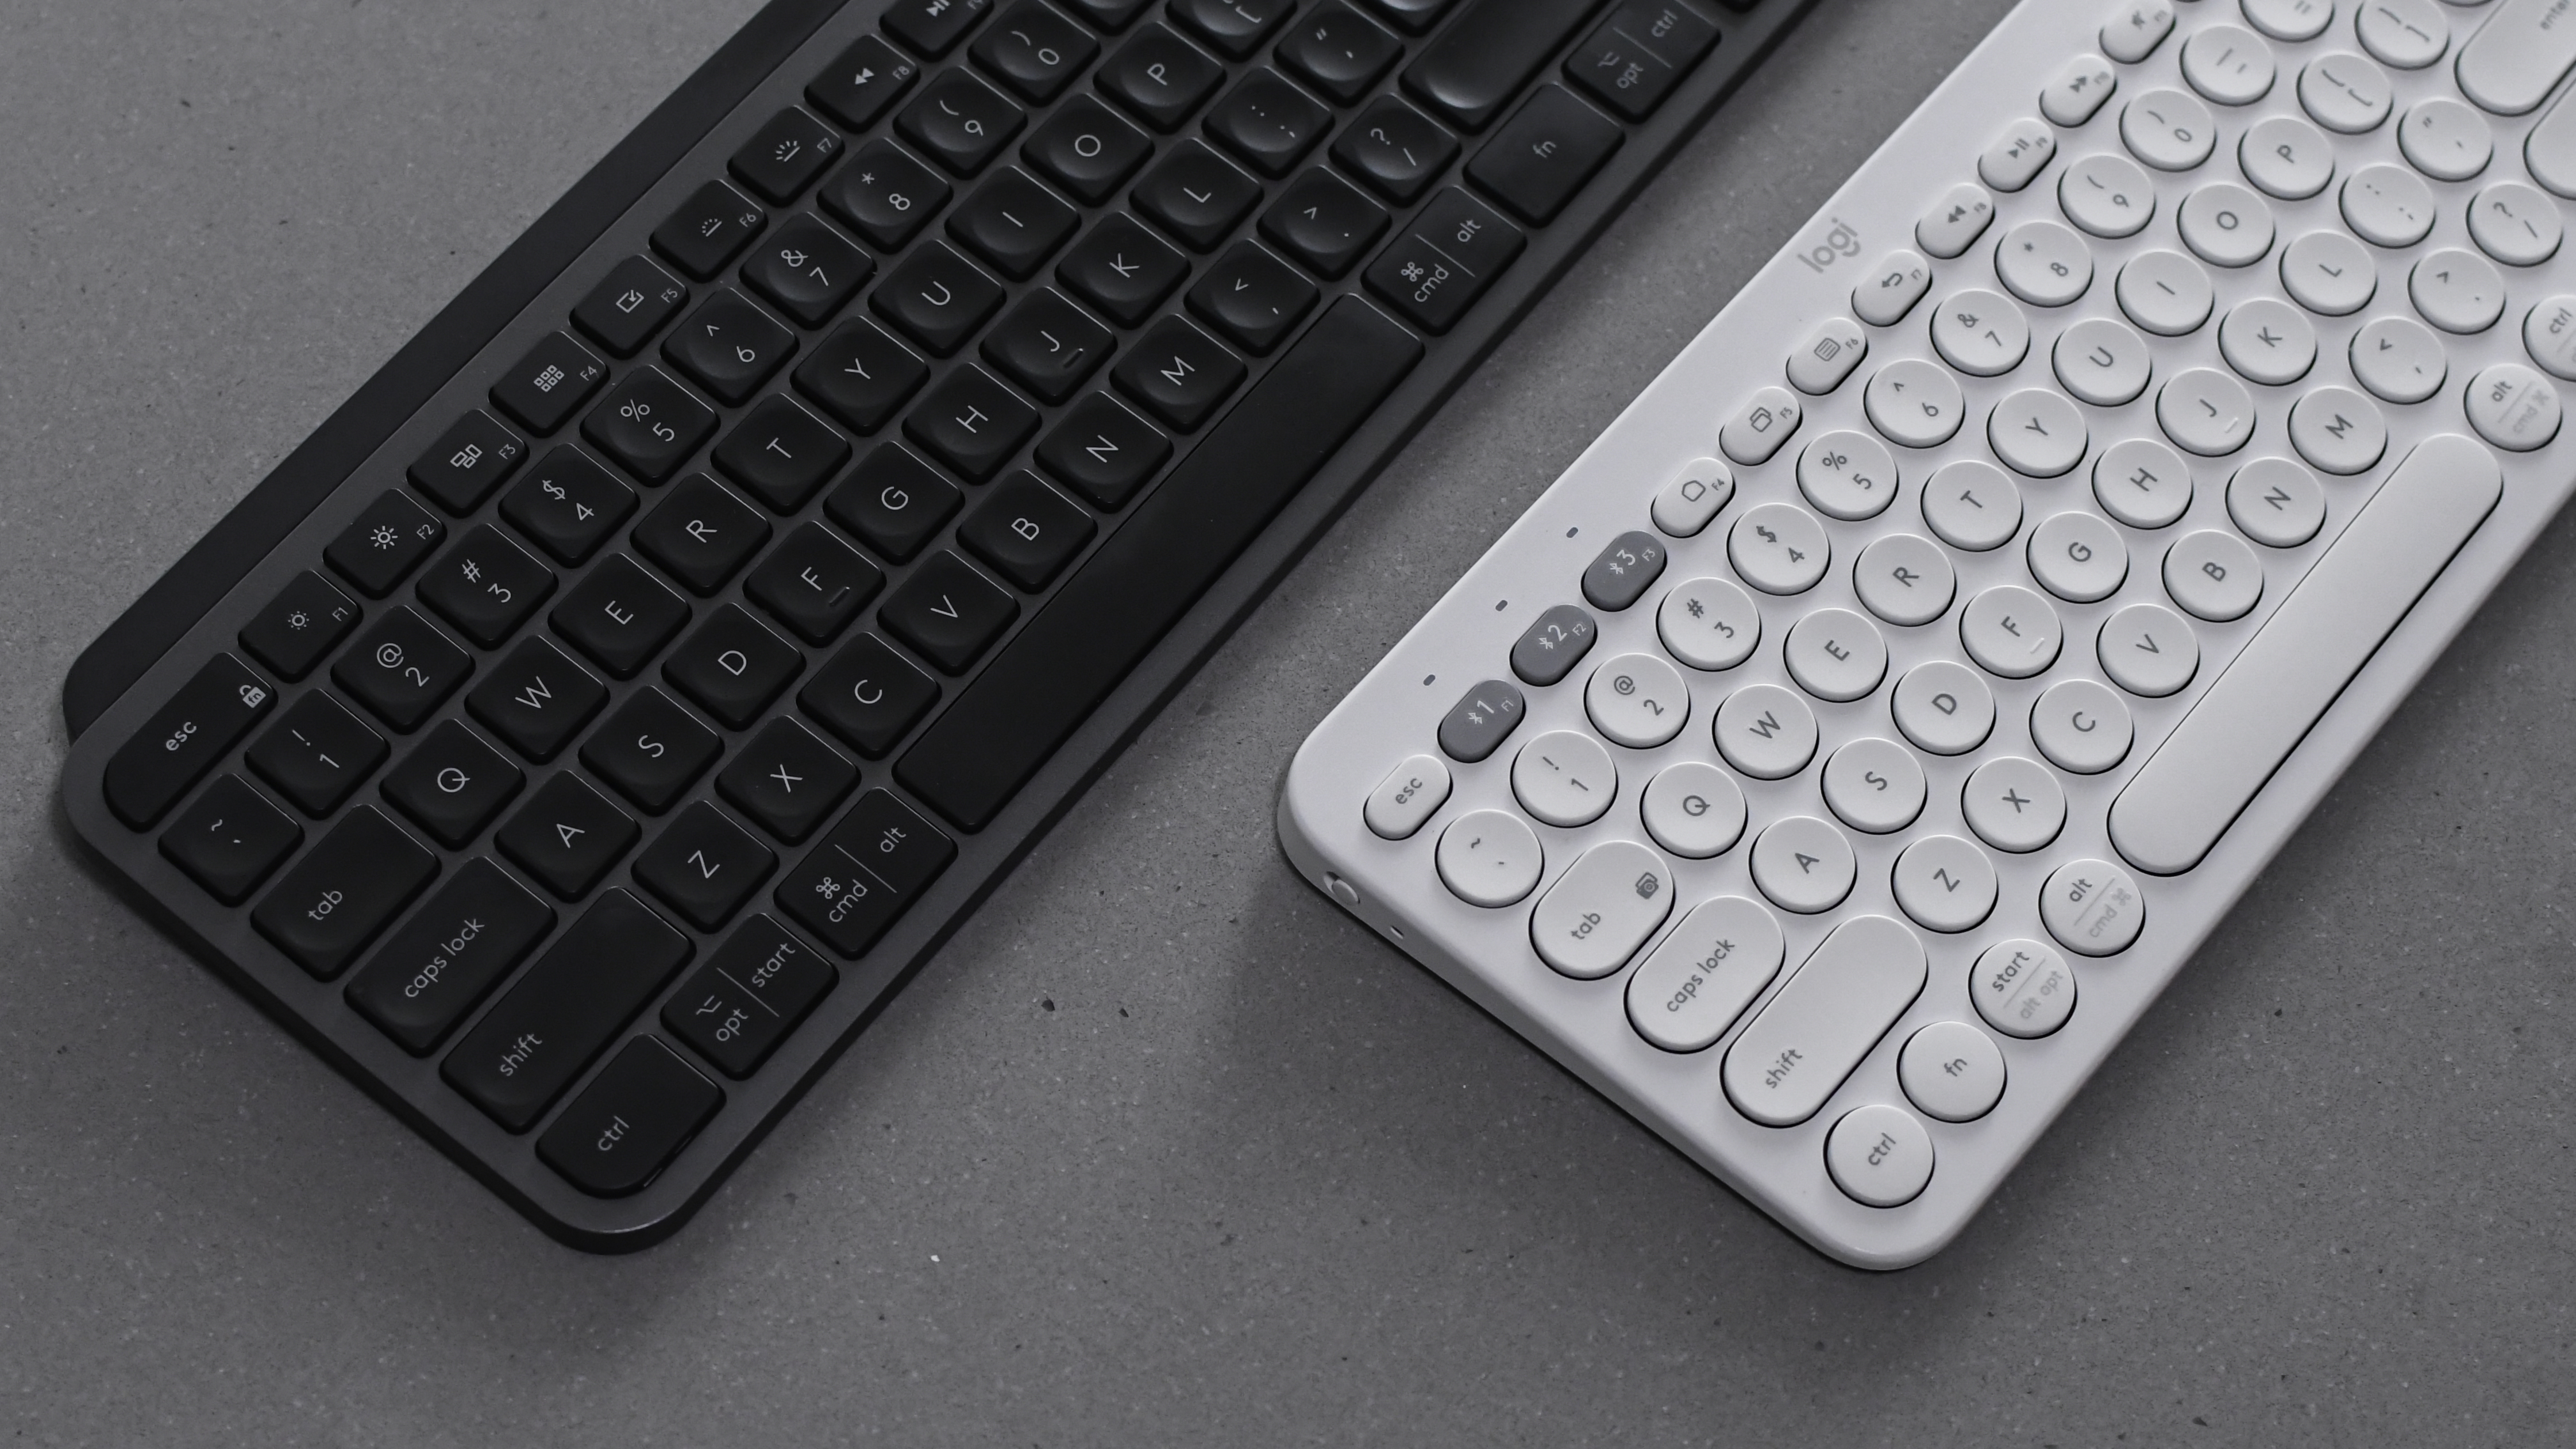 call of duty keyboard layout for mac